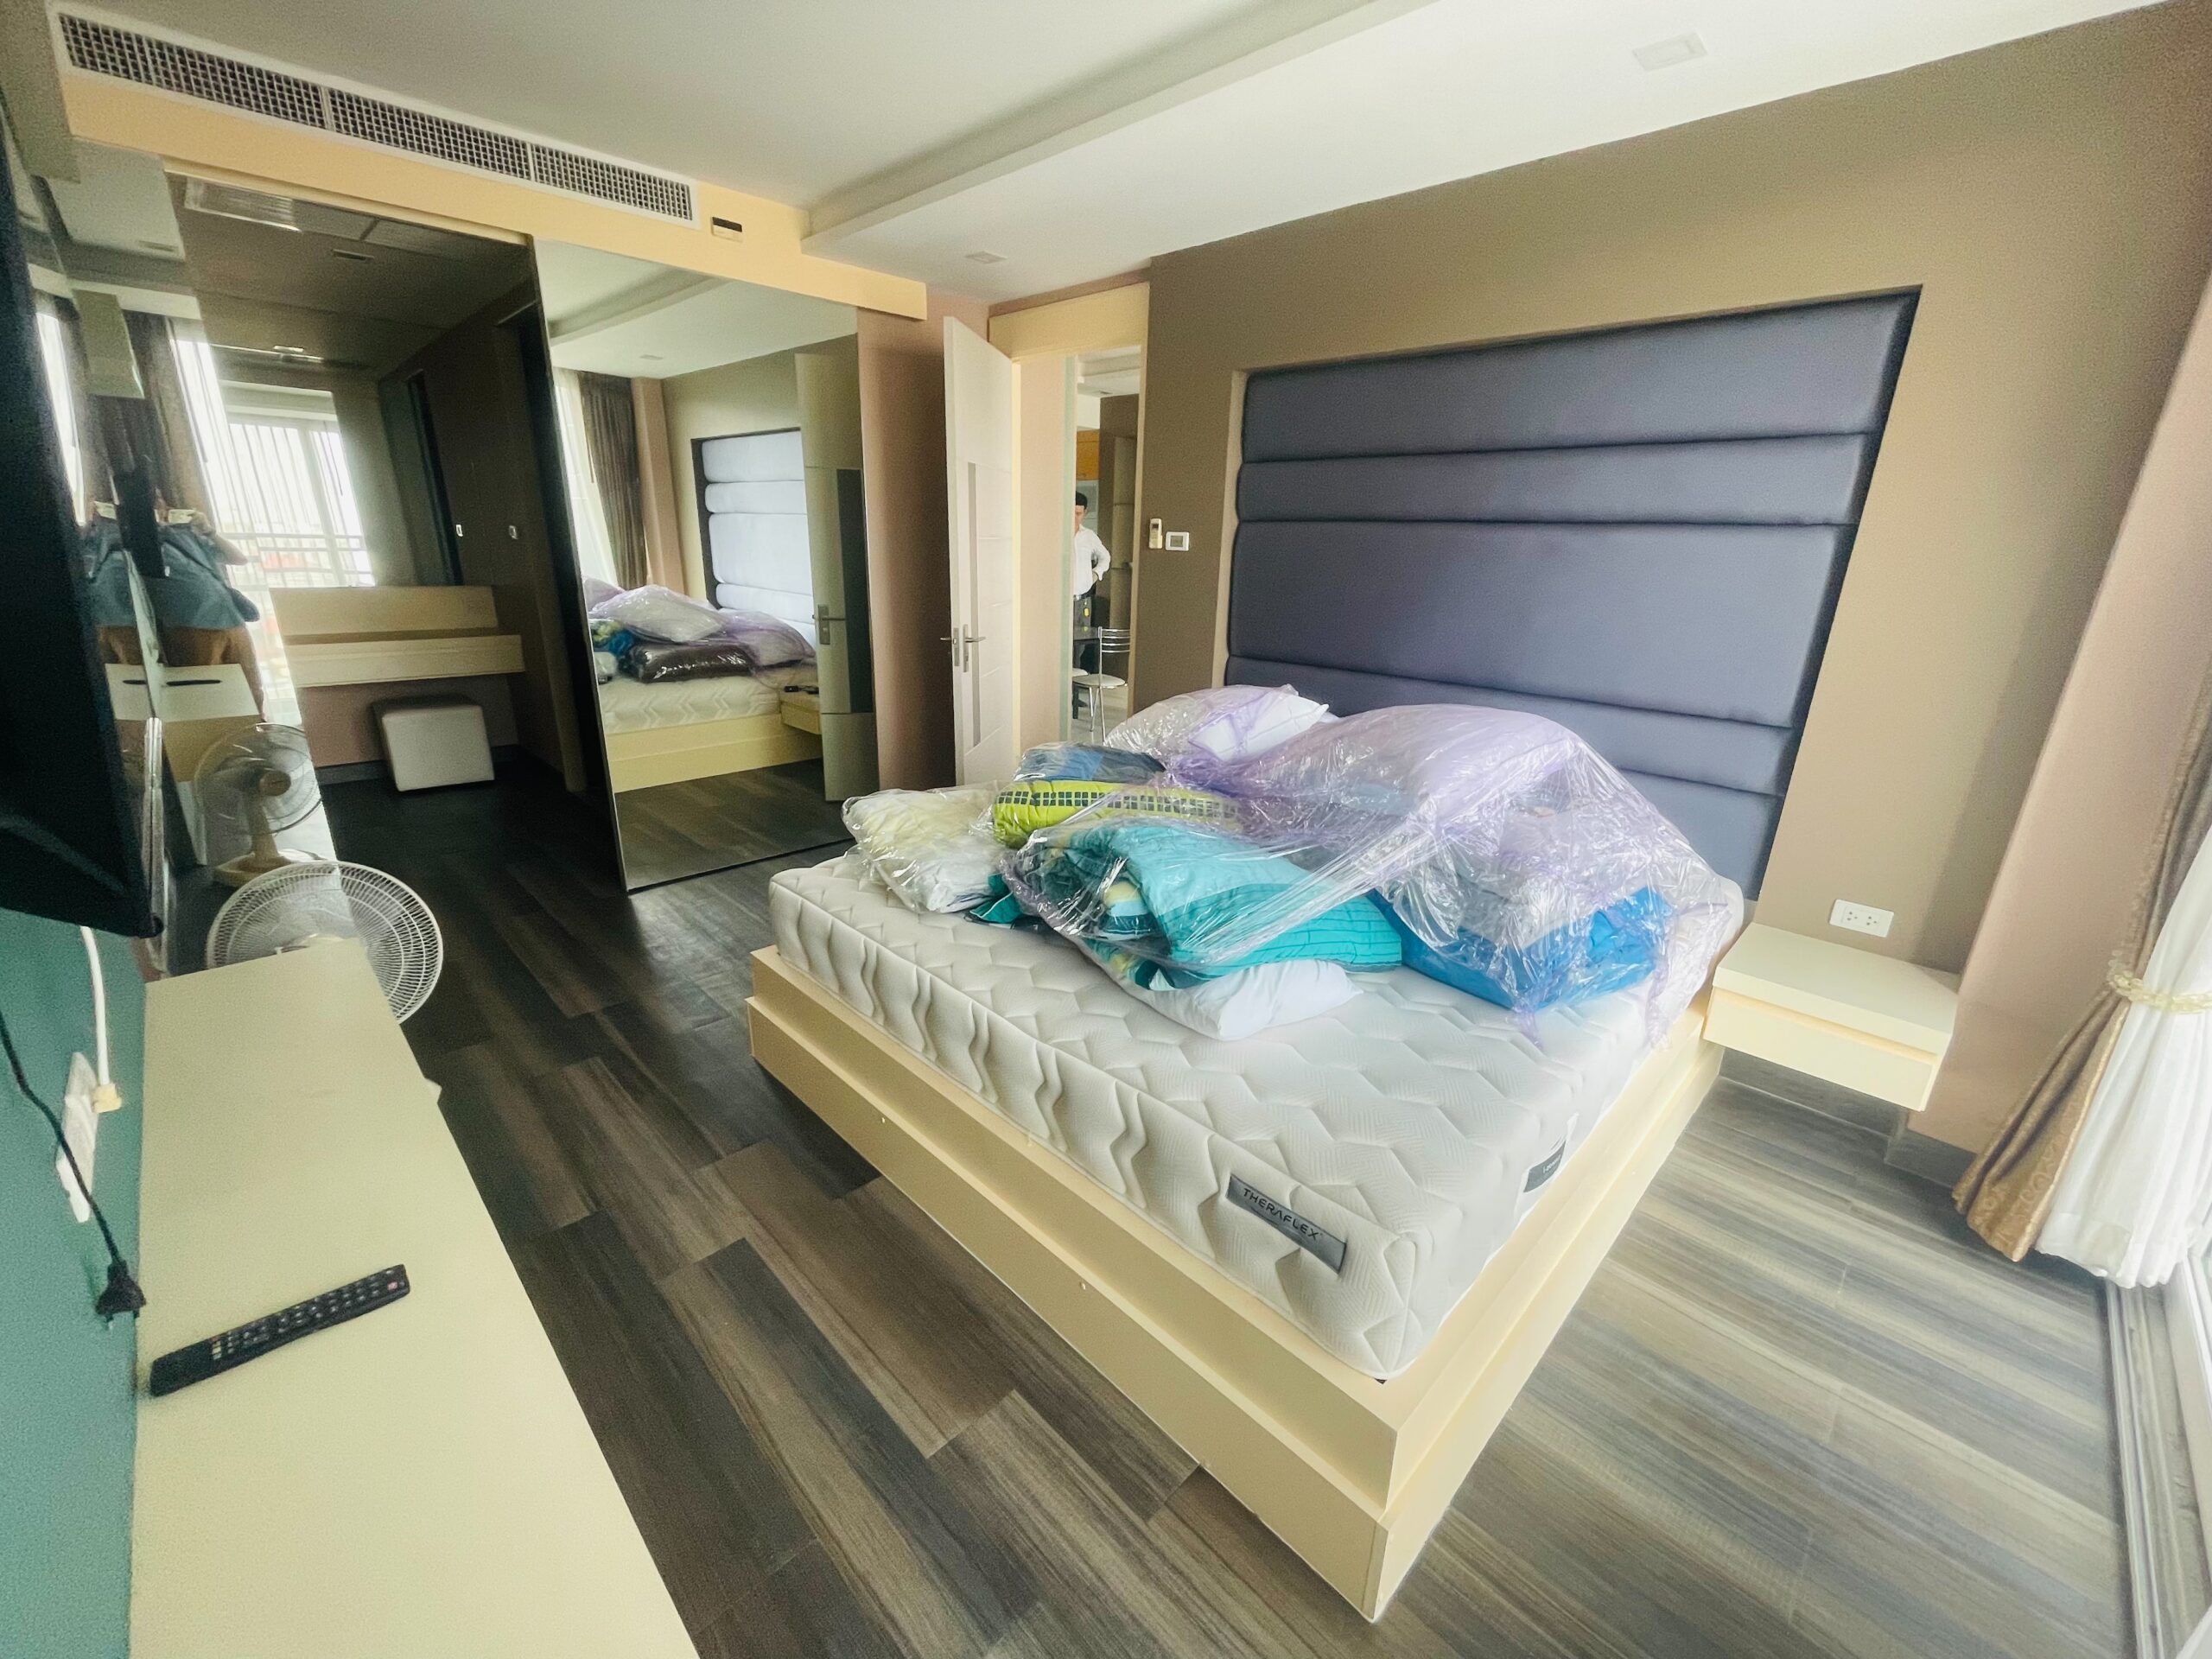 R143 Apus Pattaya Klang 3 bedrooms 114 sqm Rental price 50000 baht